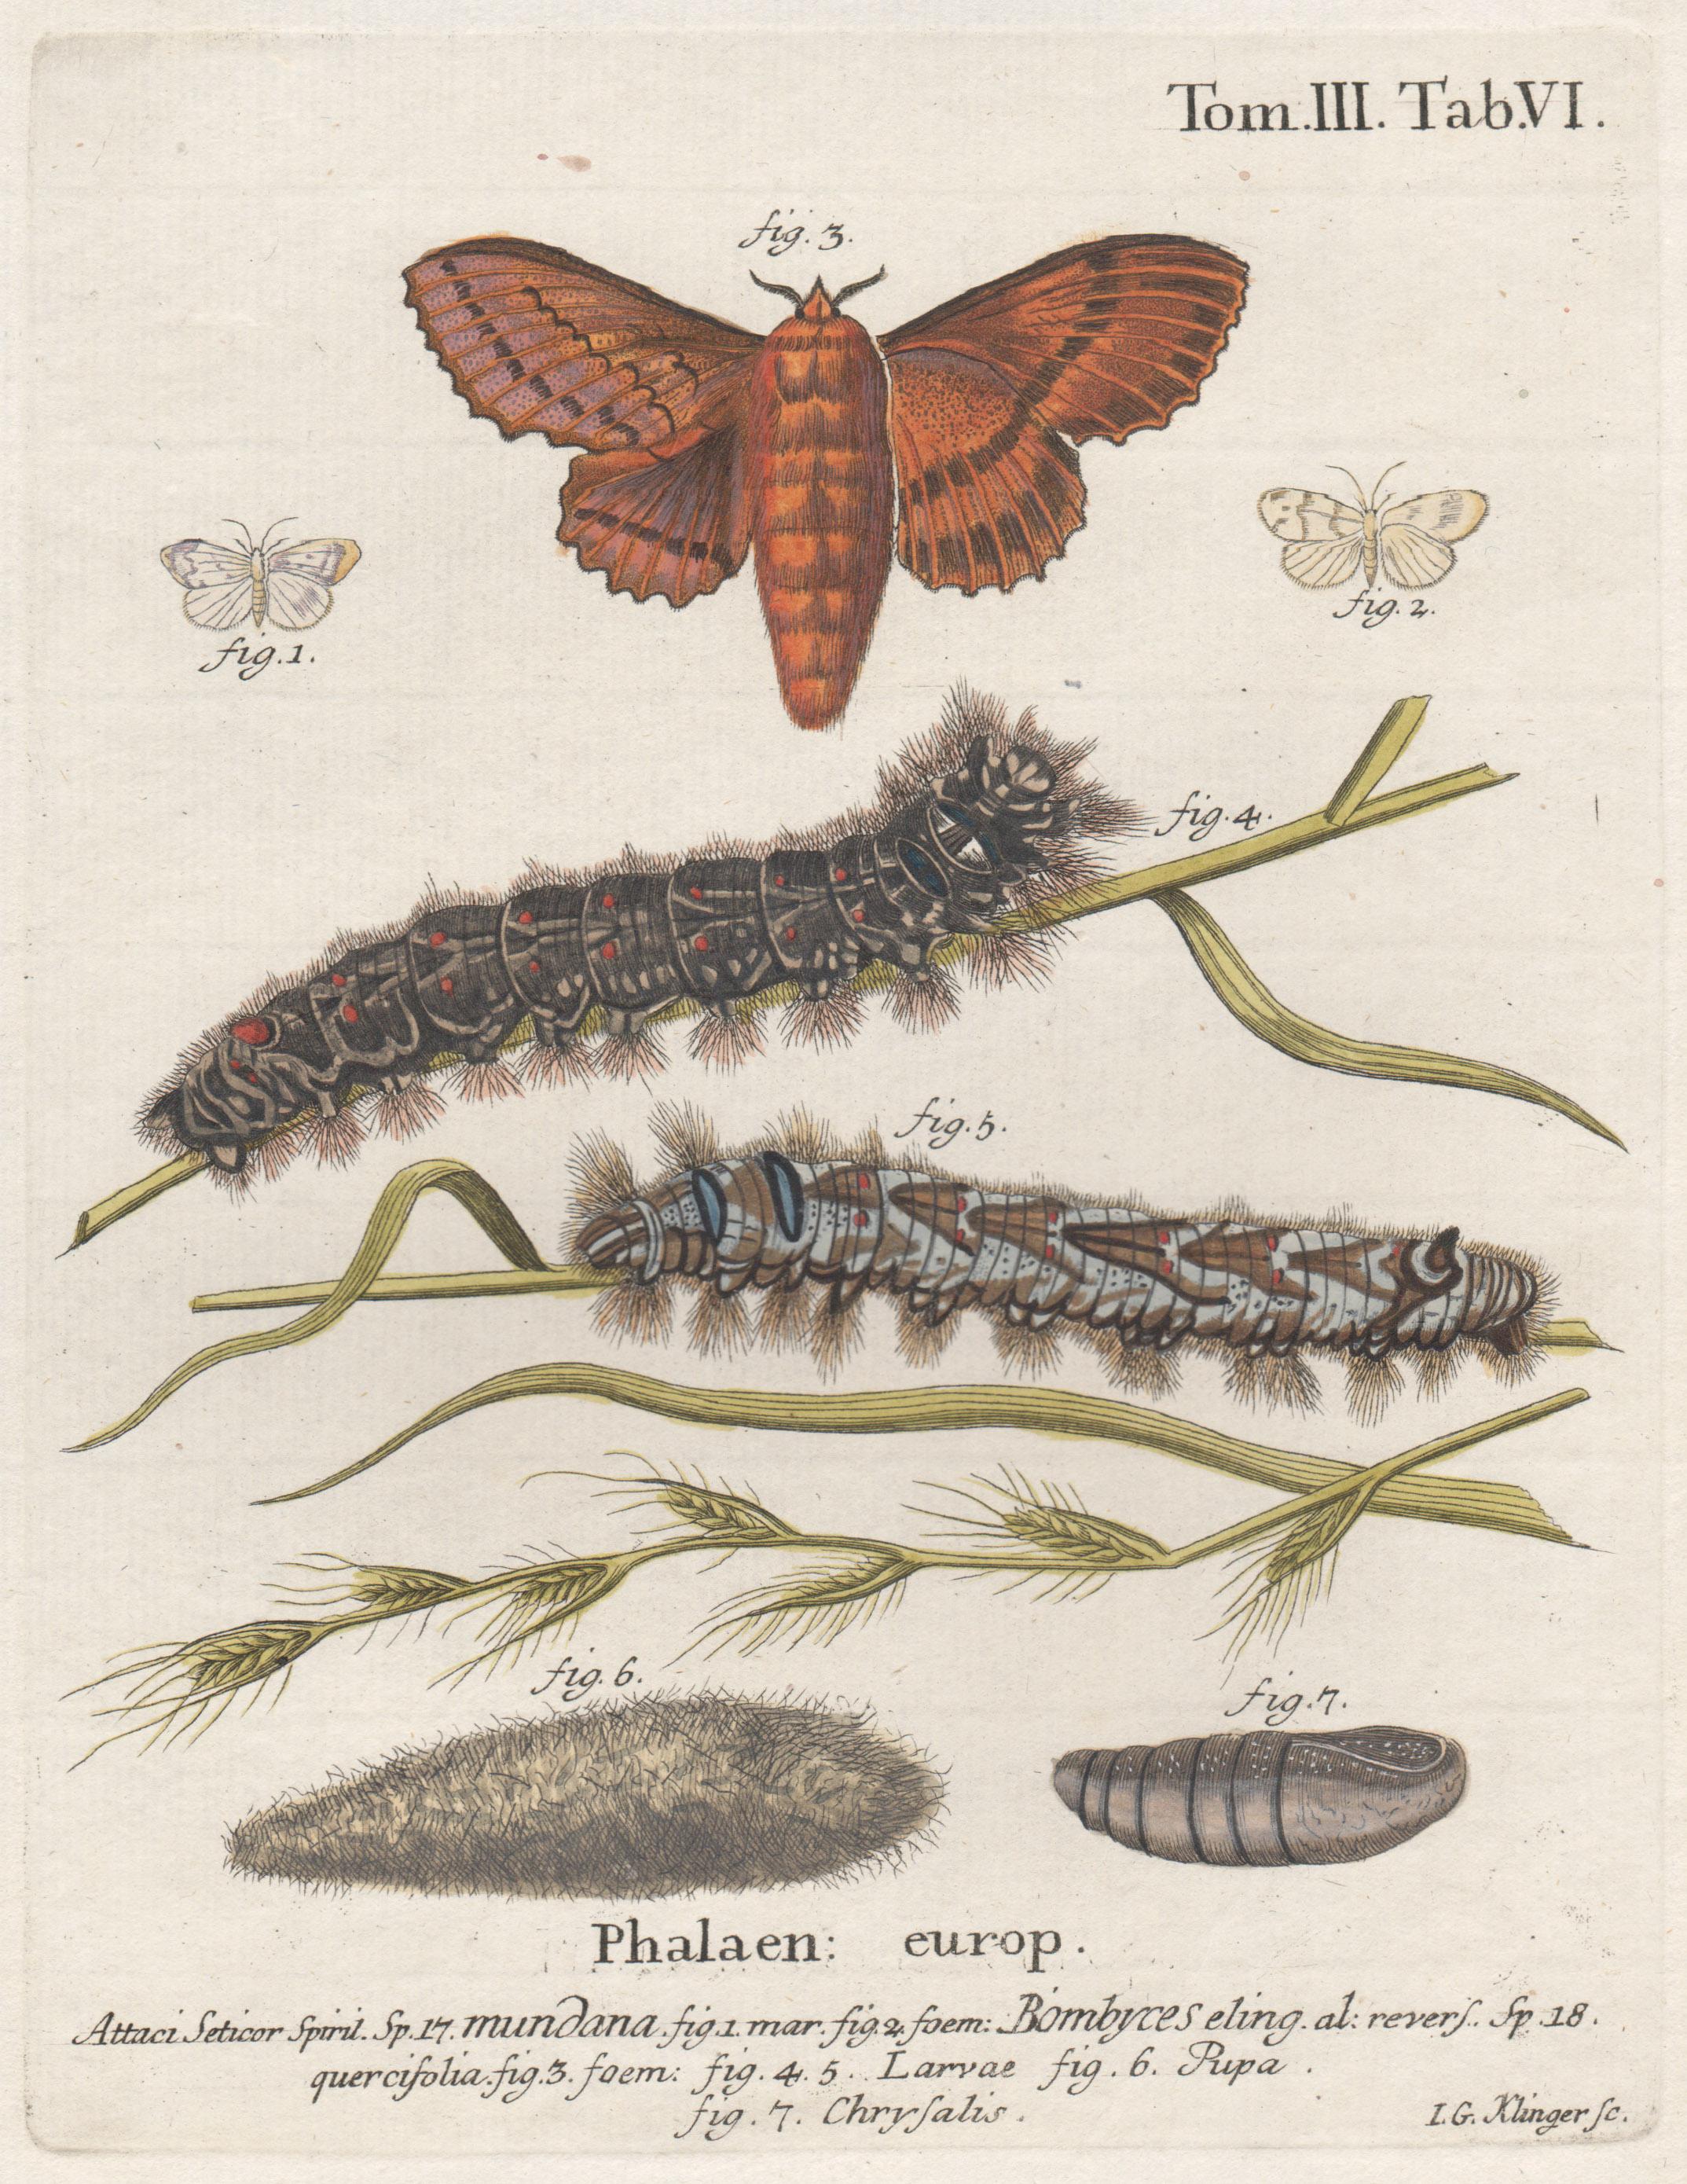 LG Klinger (engraver) Print - Esper Antique 18th century Moth engraving with original hand-colouring